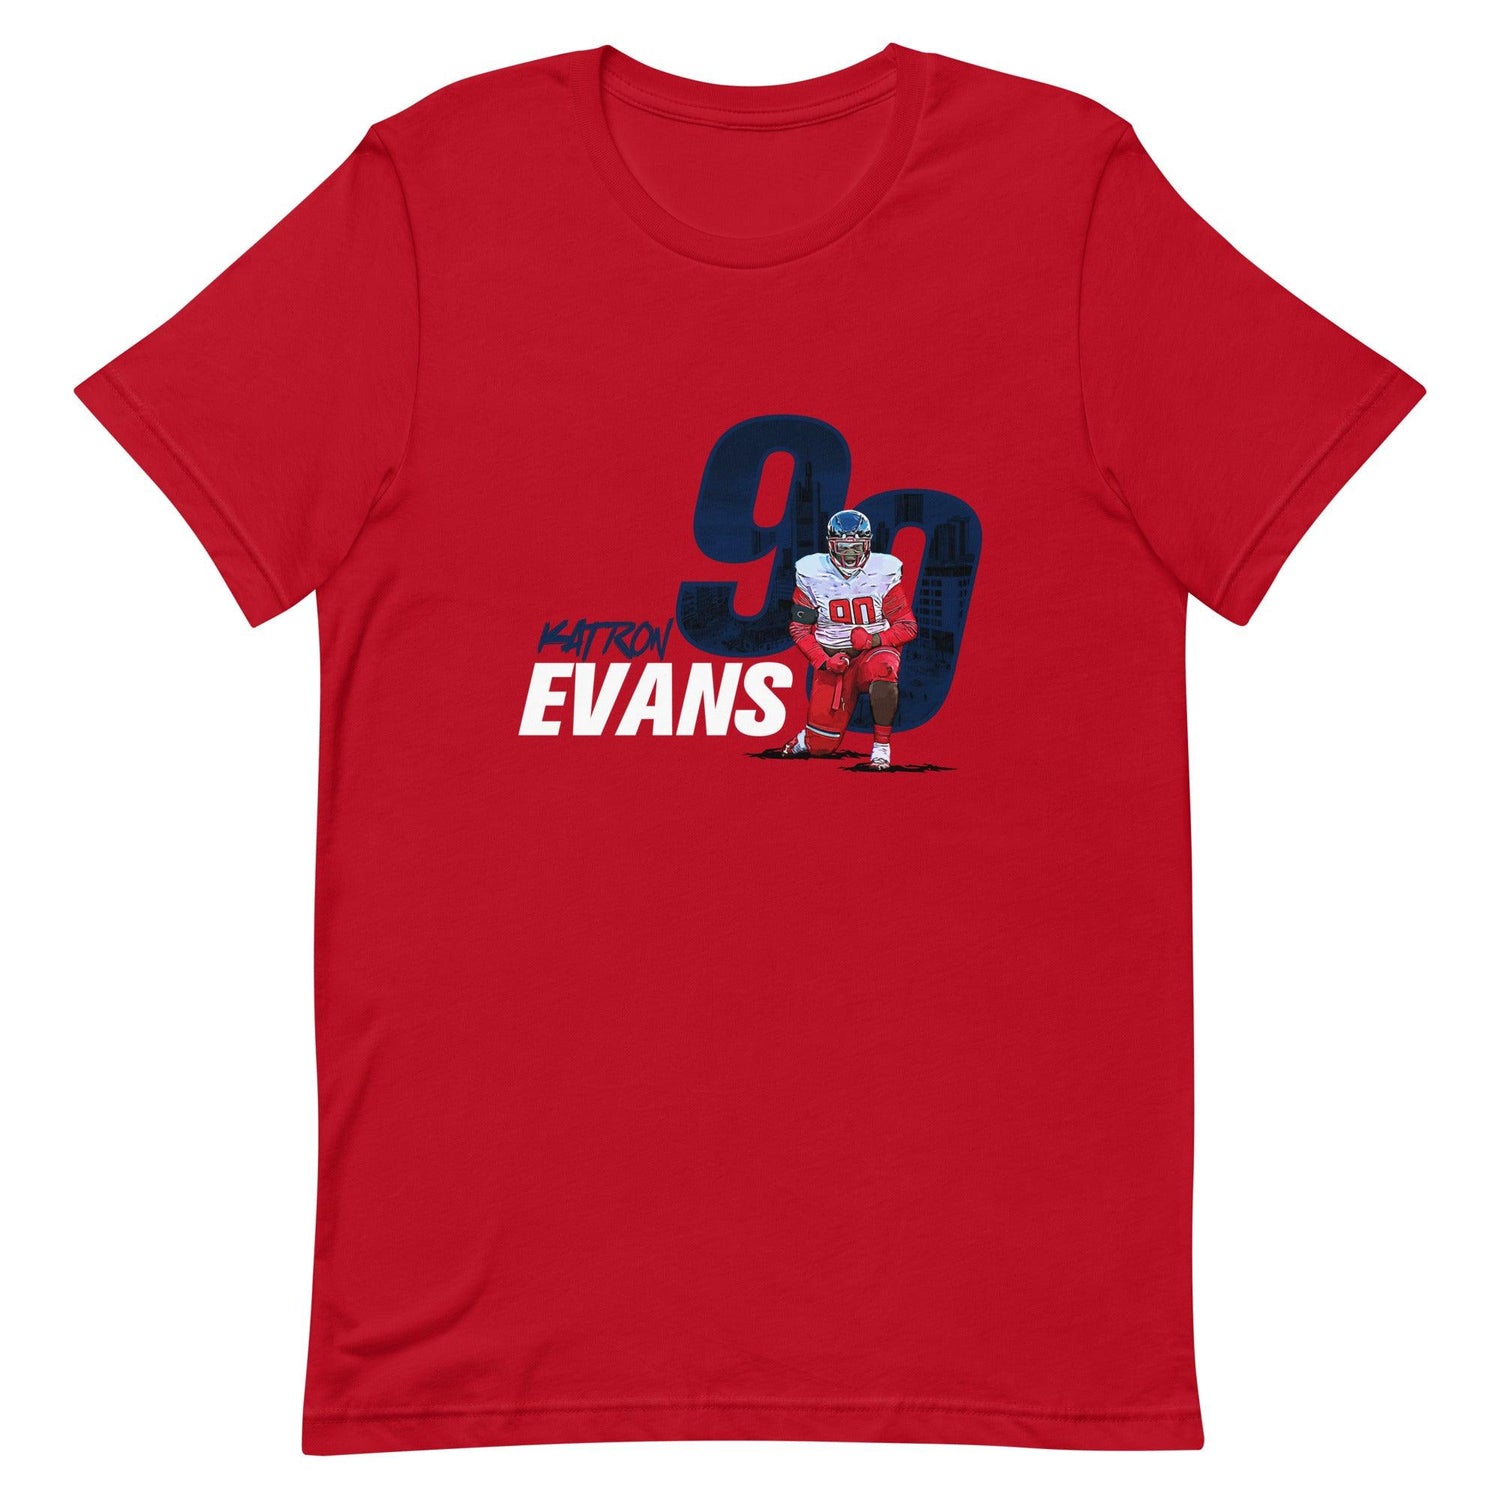 Katron Evans "Gameday" t-shirt - Fan Arch